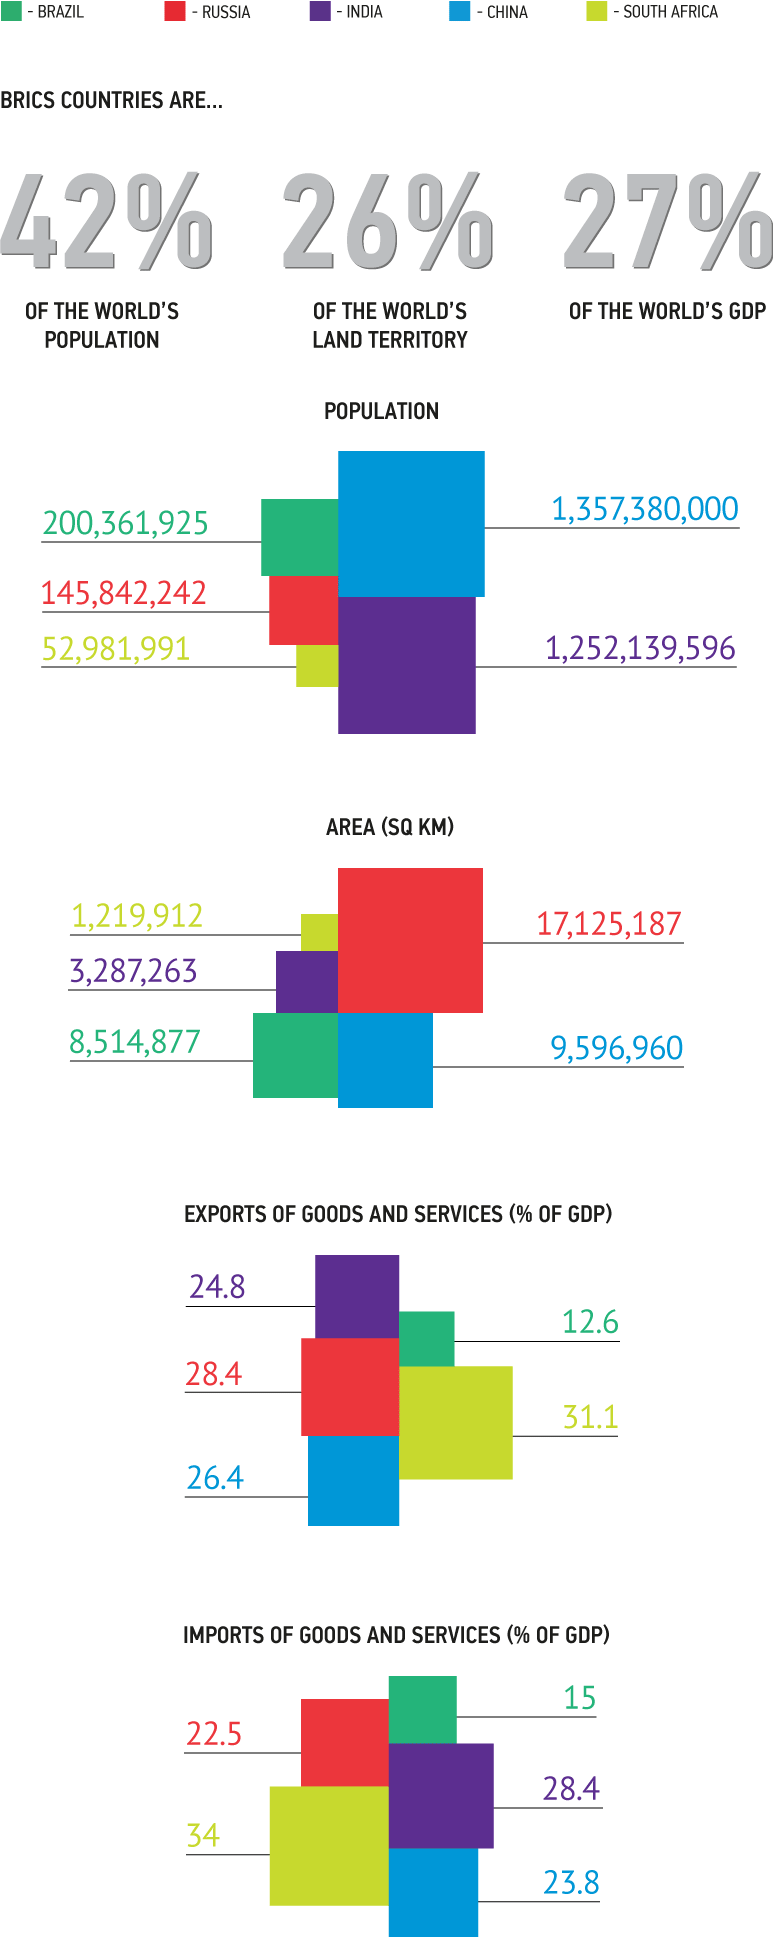 BRICS in Numbers